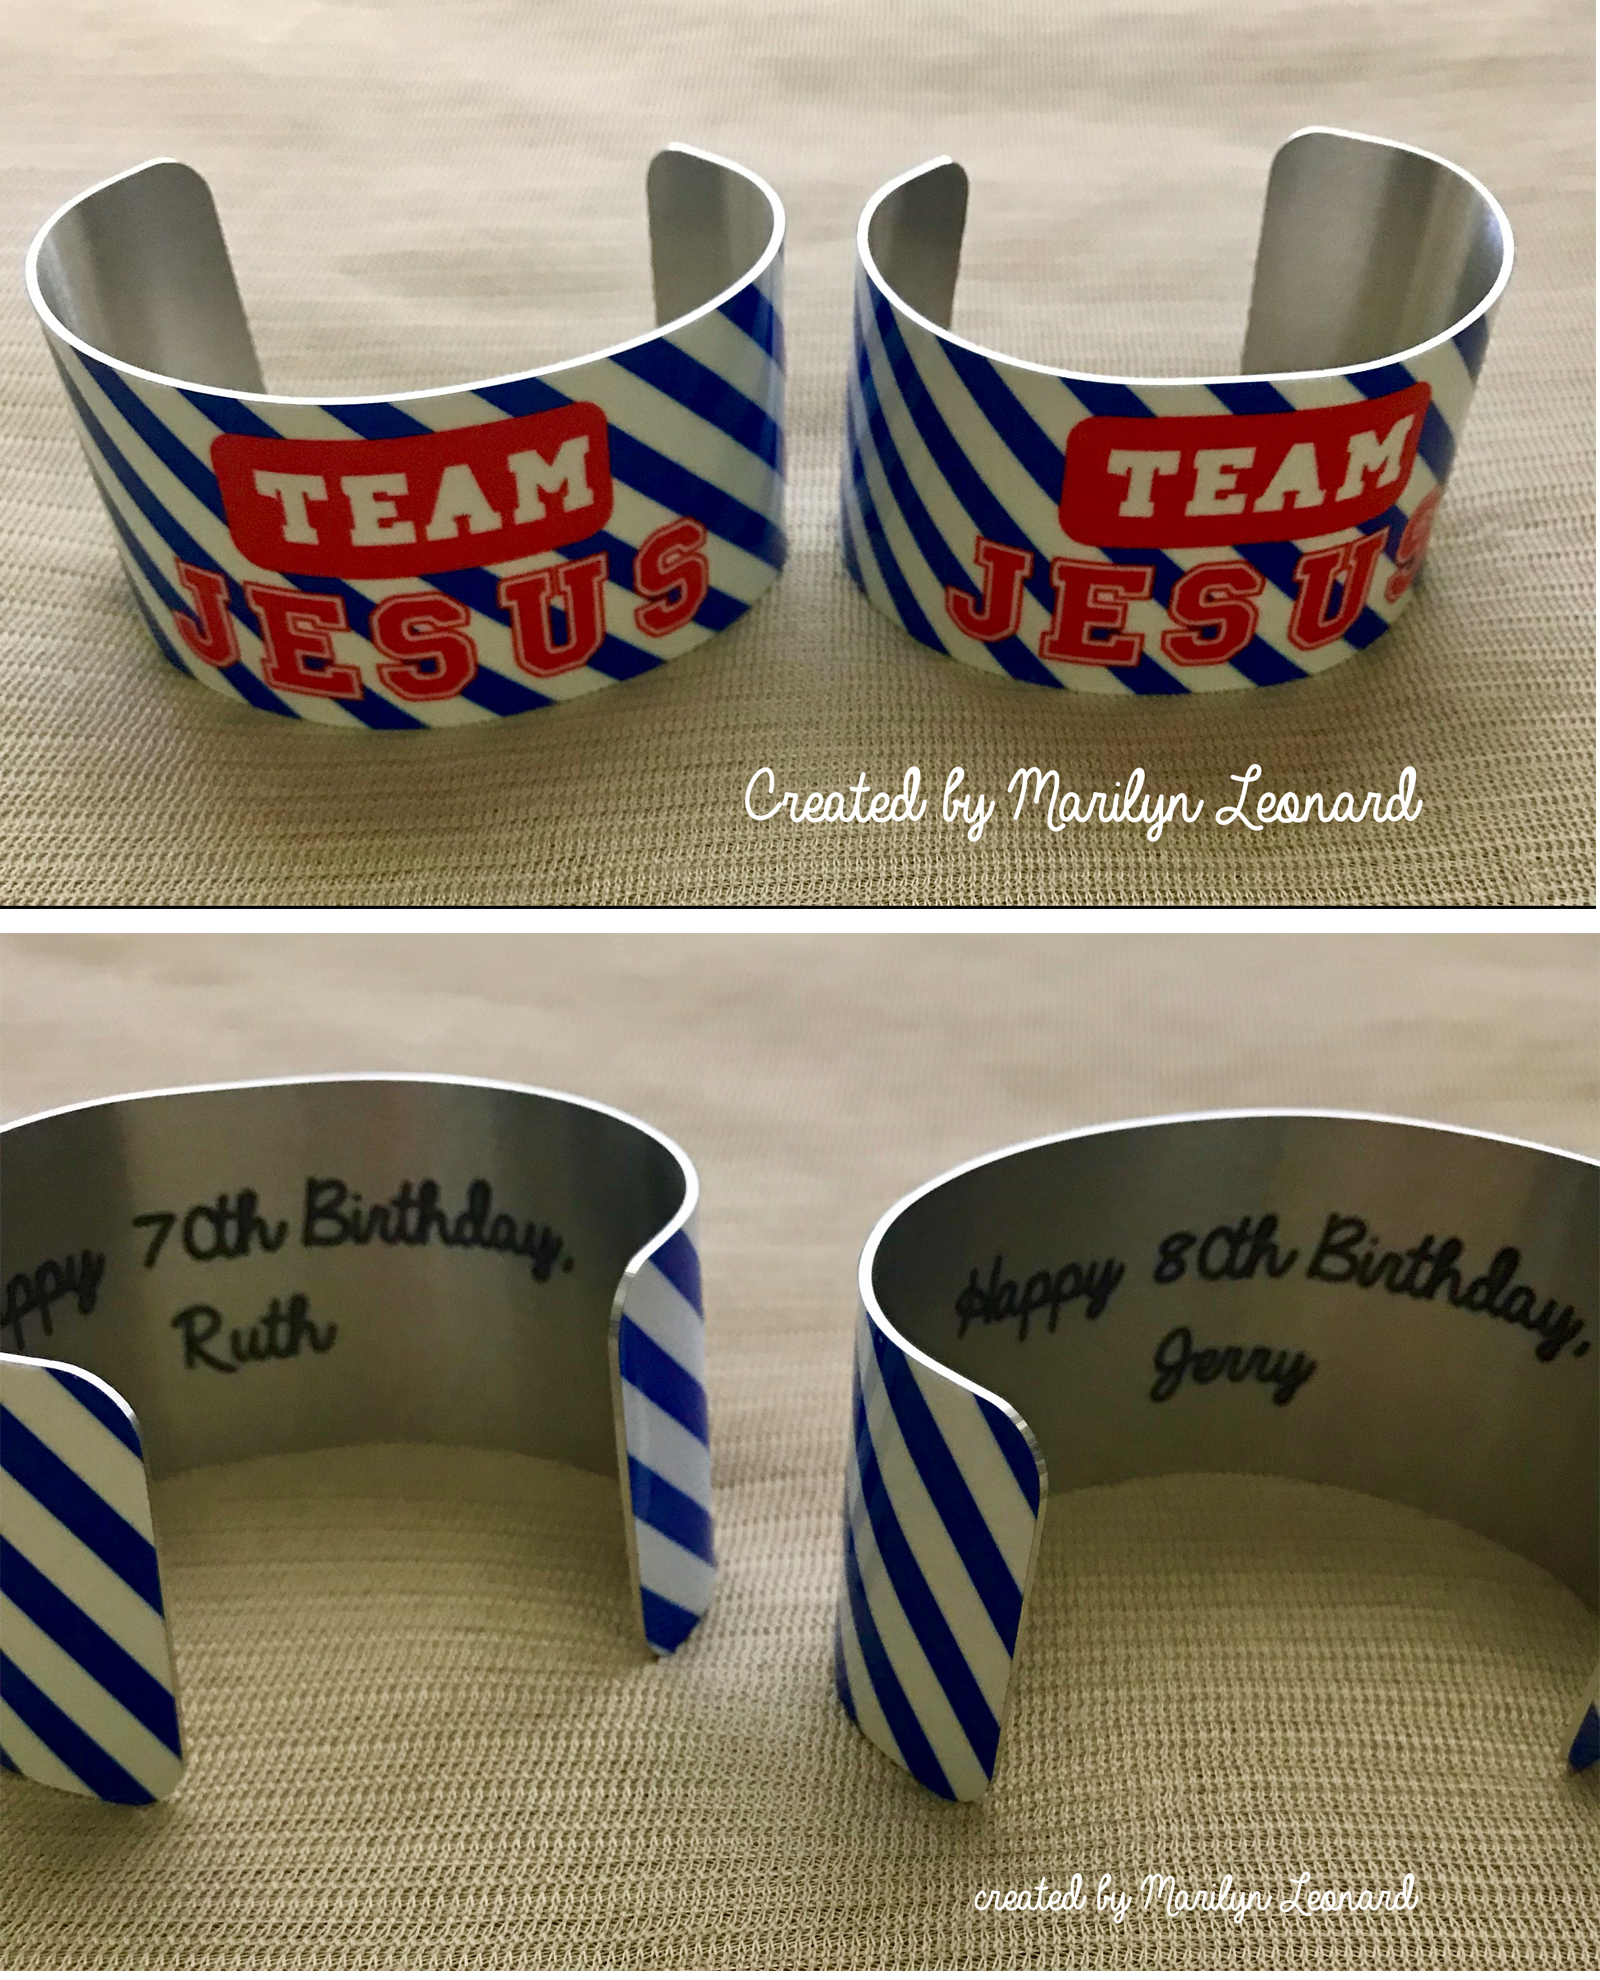 Team Jesus Bracelets made with sublimation printing